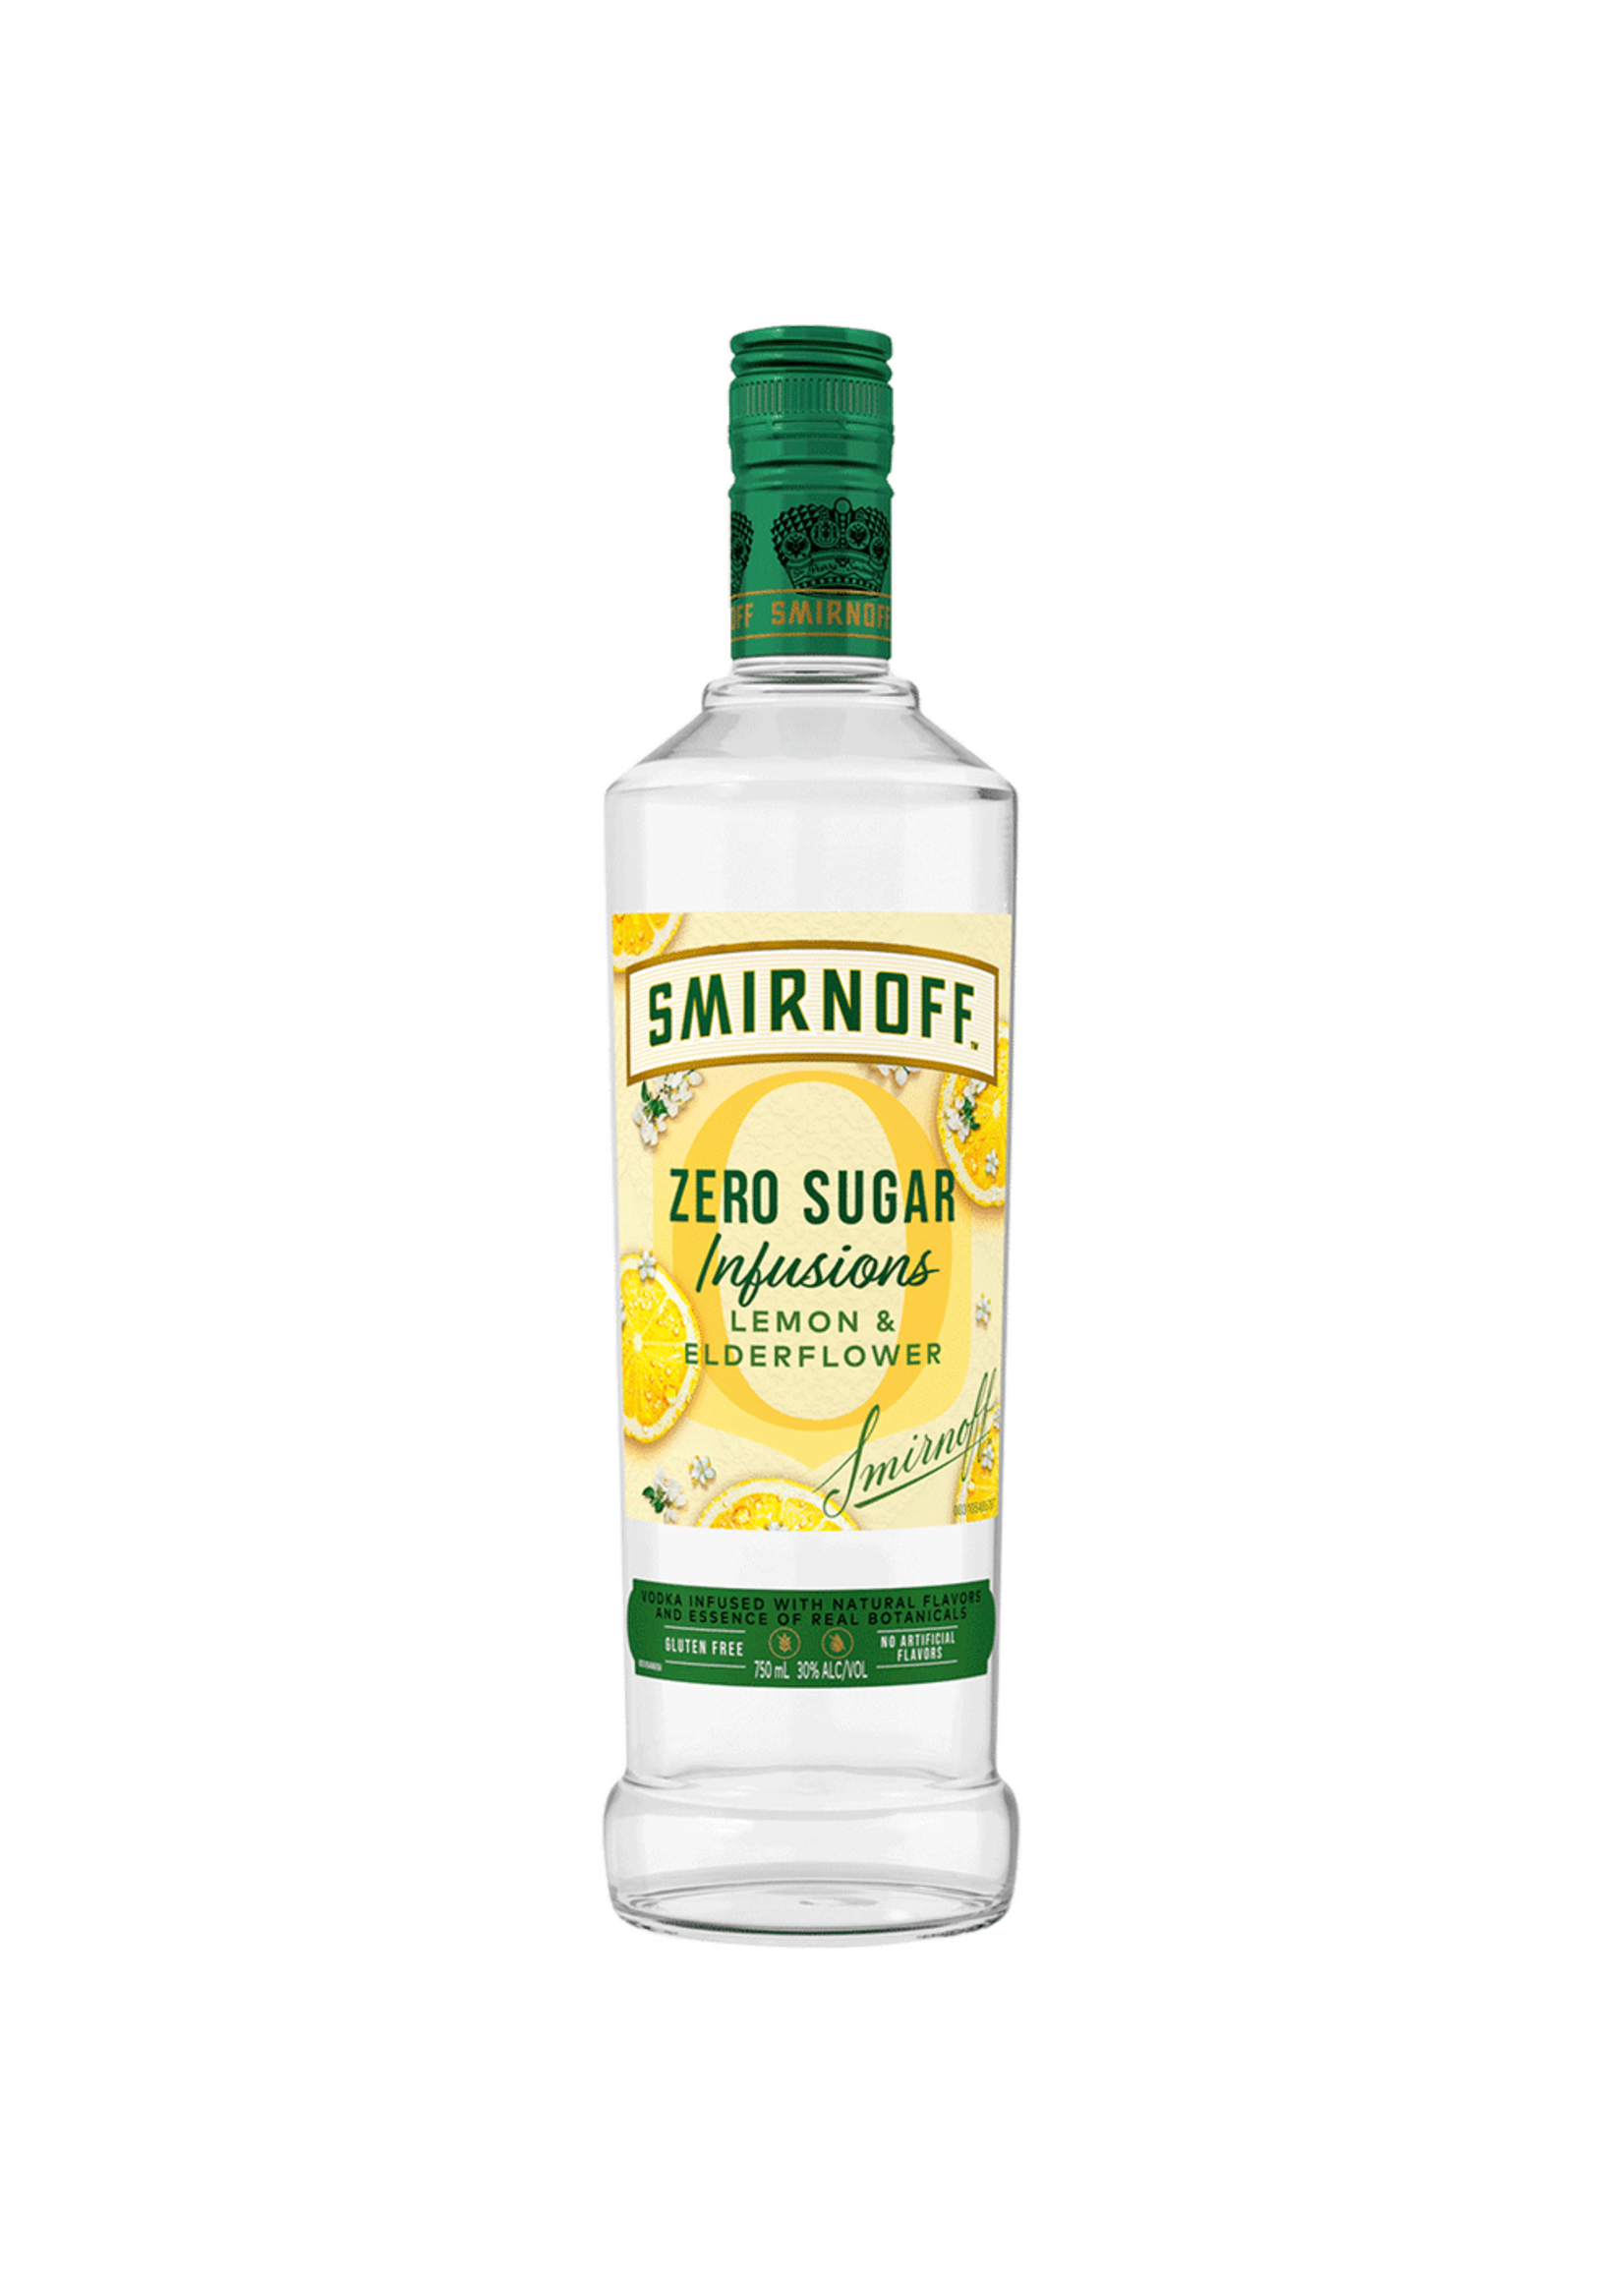 Smirnoff  Vodka Smirnoff Zero Sugar Infusions Vodka Lemon & Elderflower 60ProoF 750ml